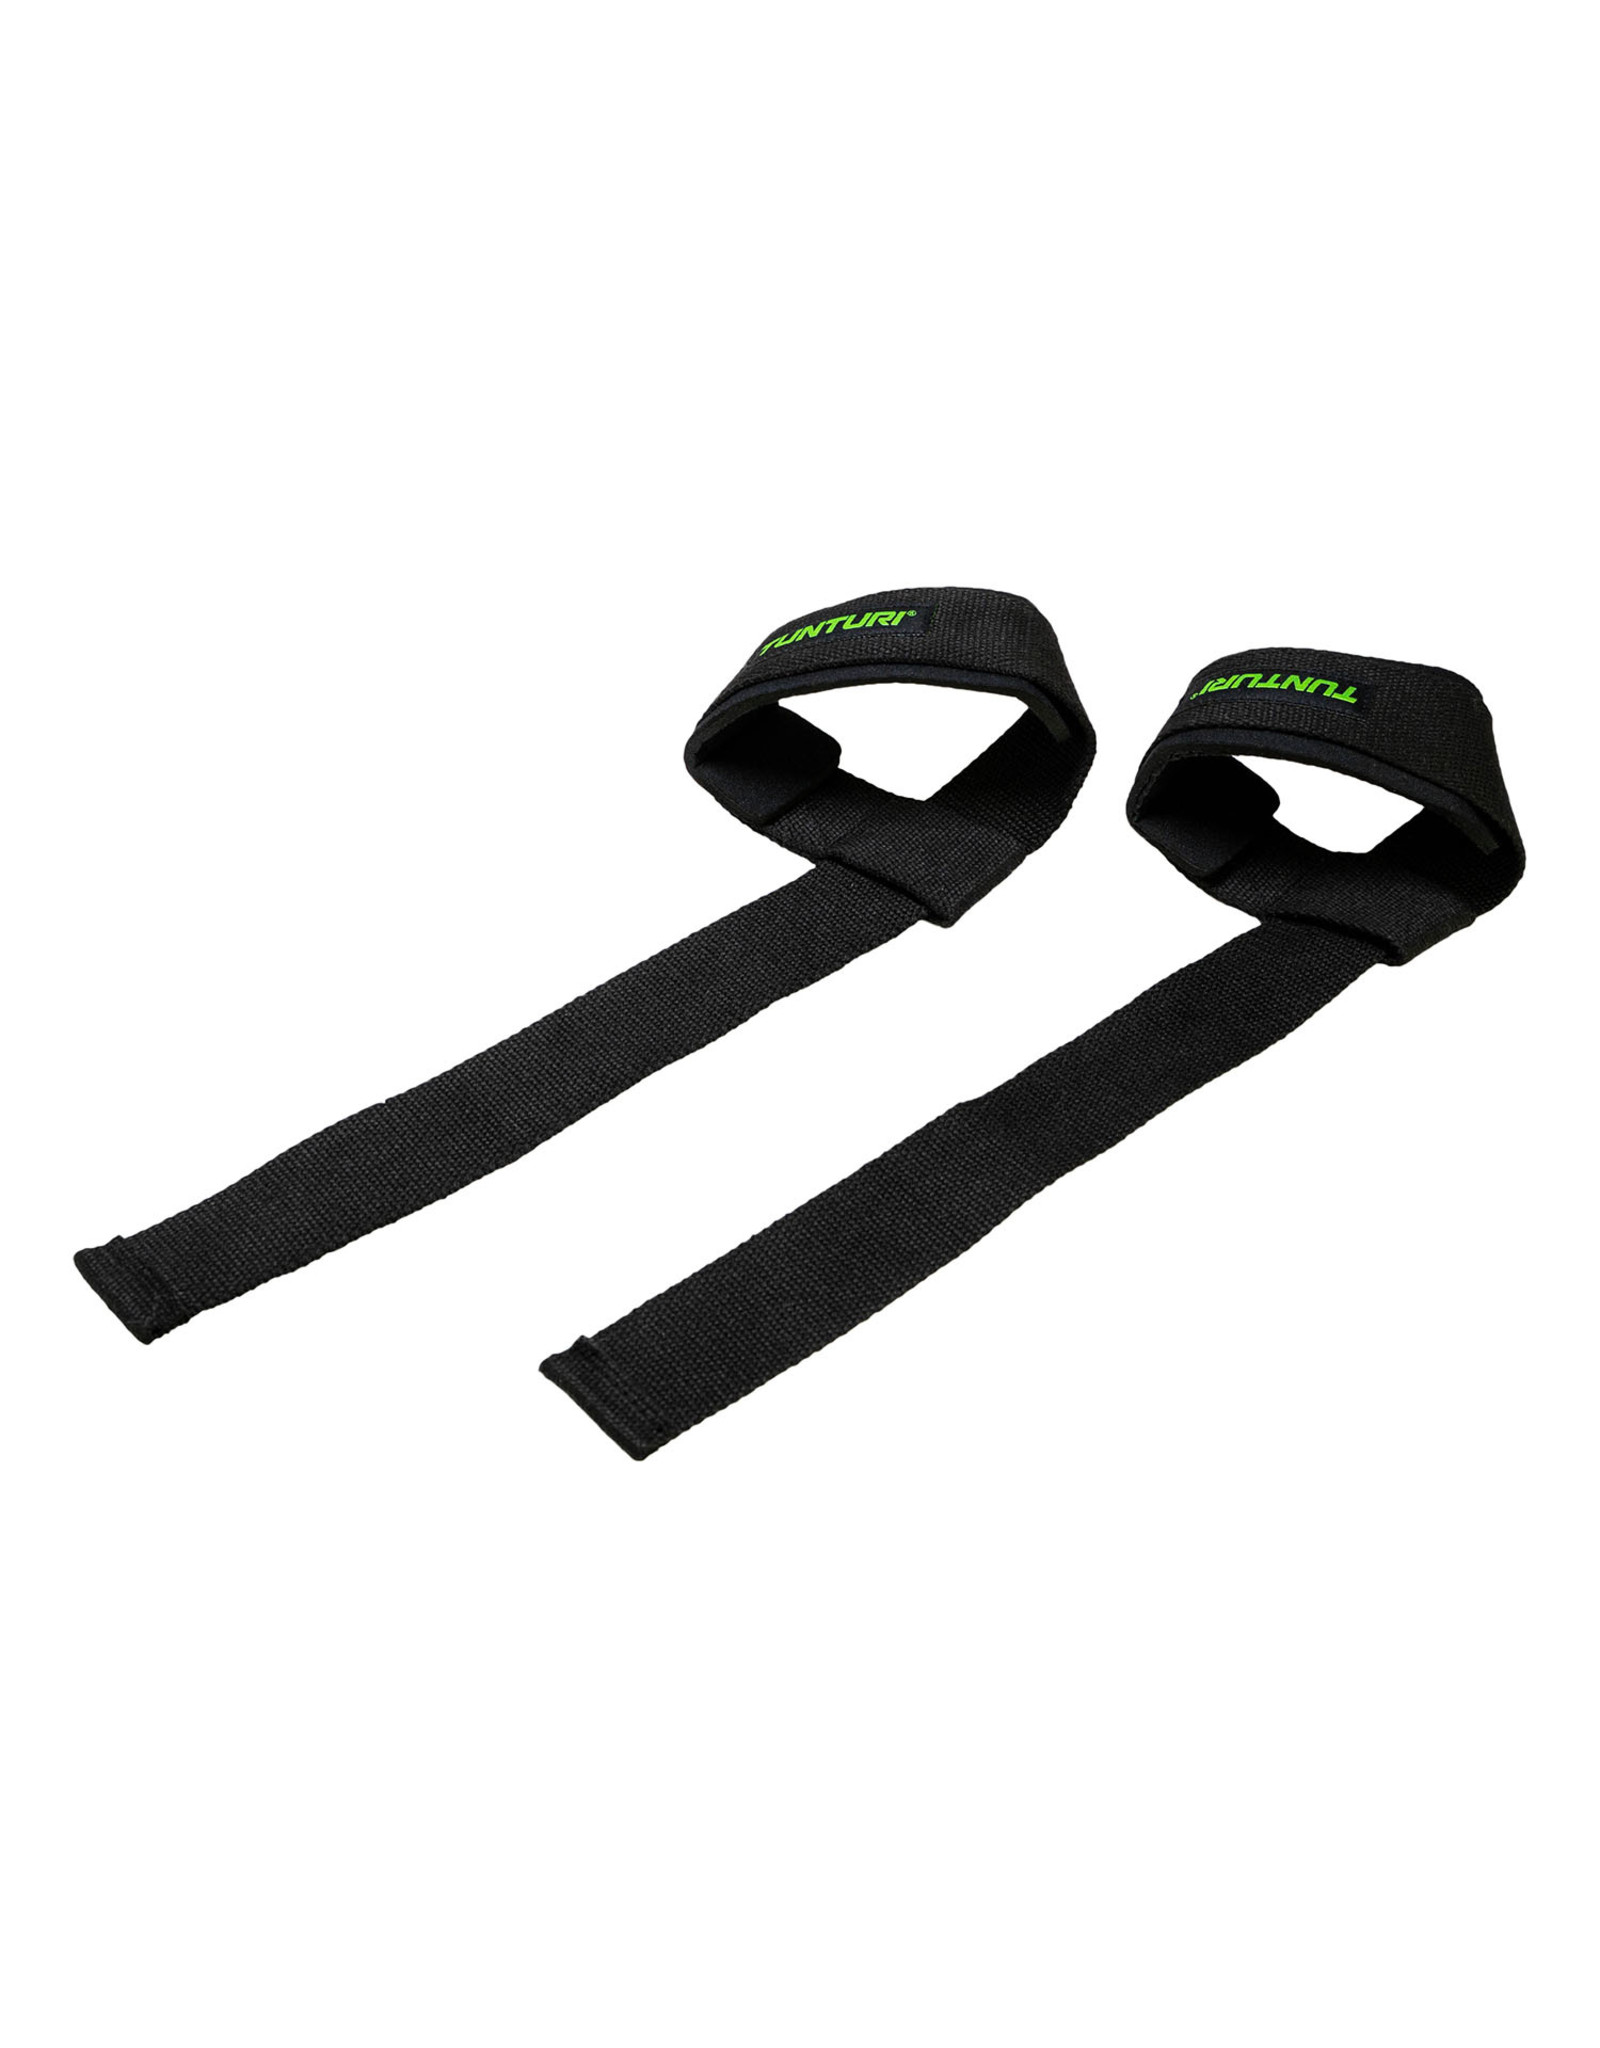 Tunturi Lifting Straps - wrist straps - Padded - NiemanSports